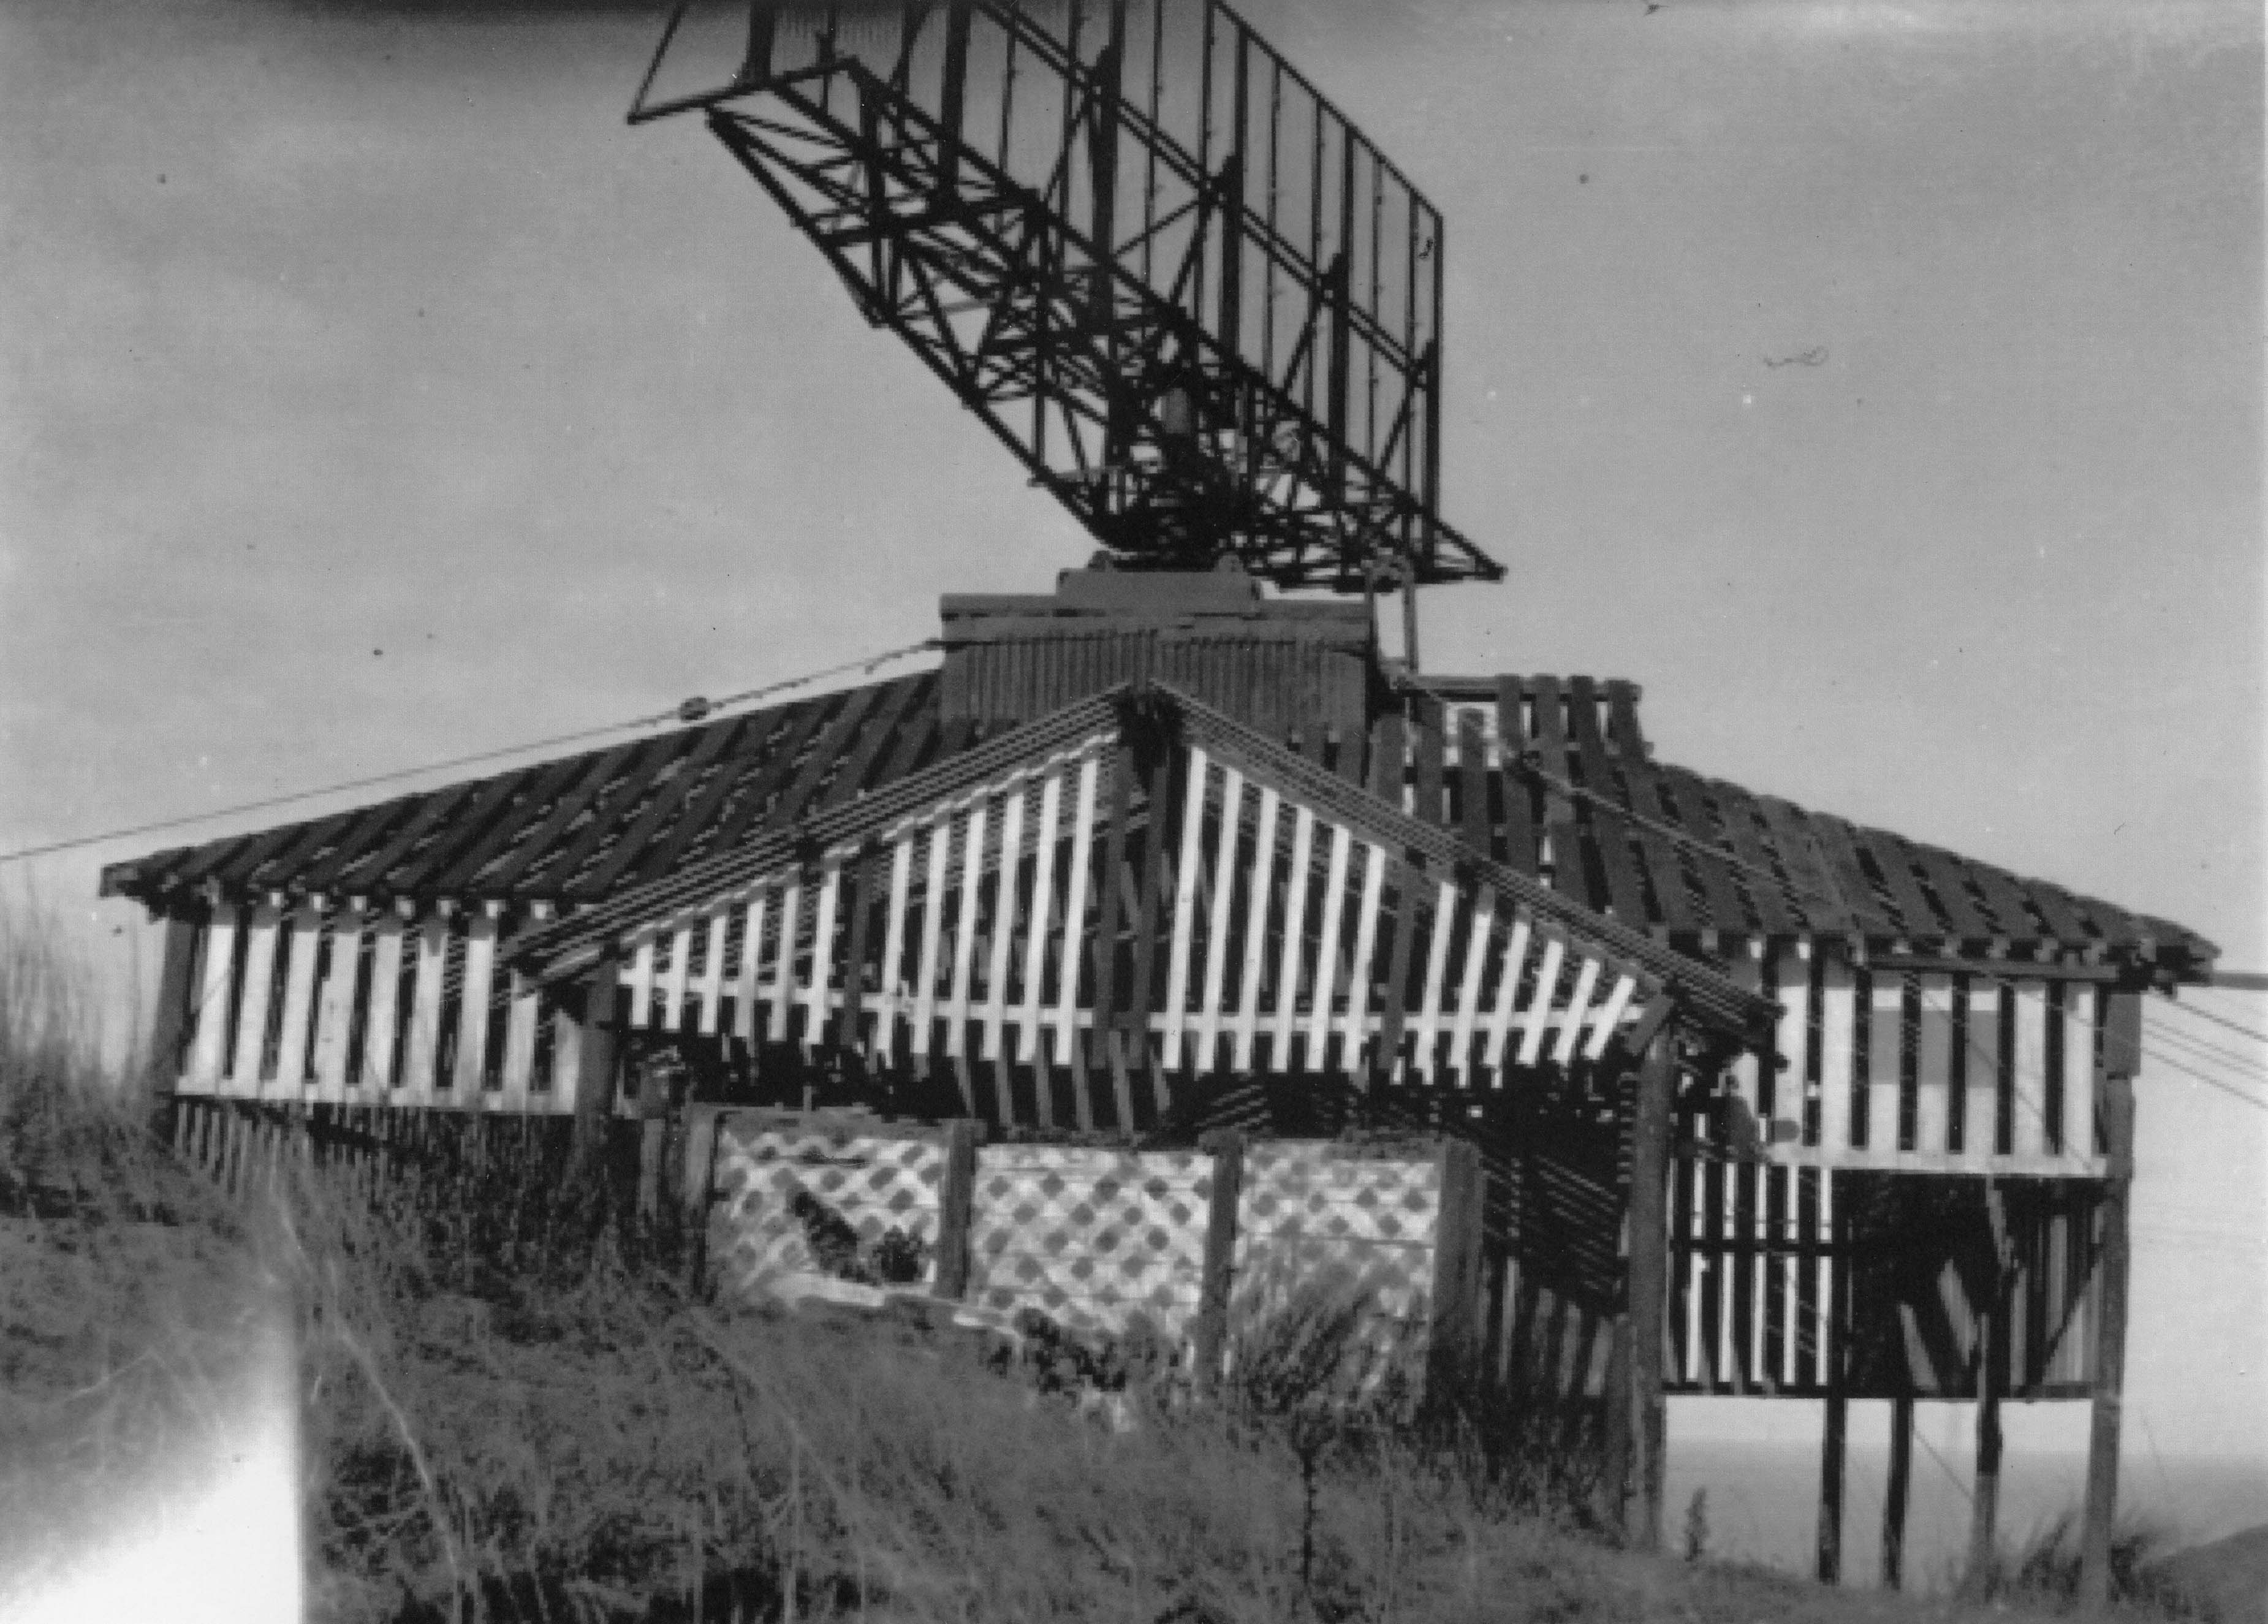 Grassy Hill - The Radar Station